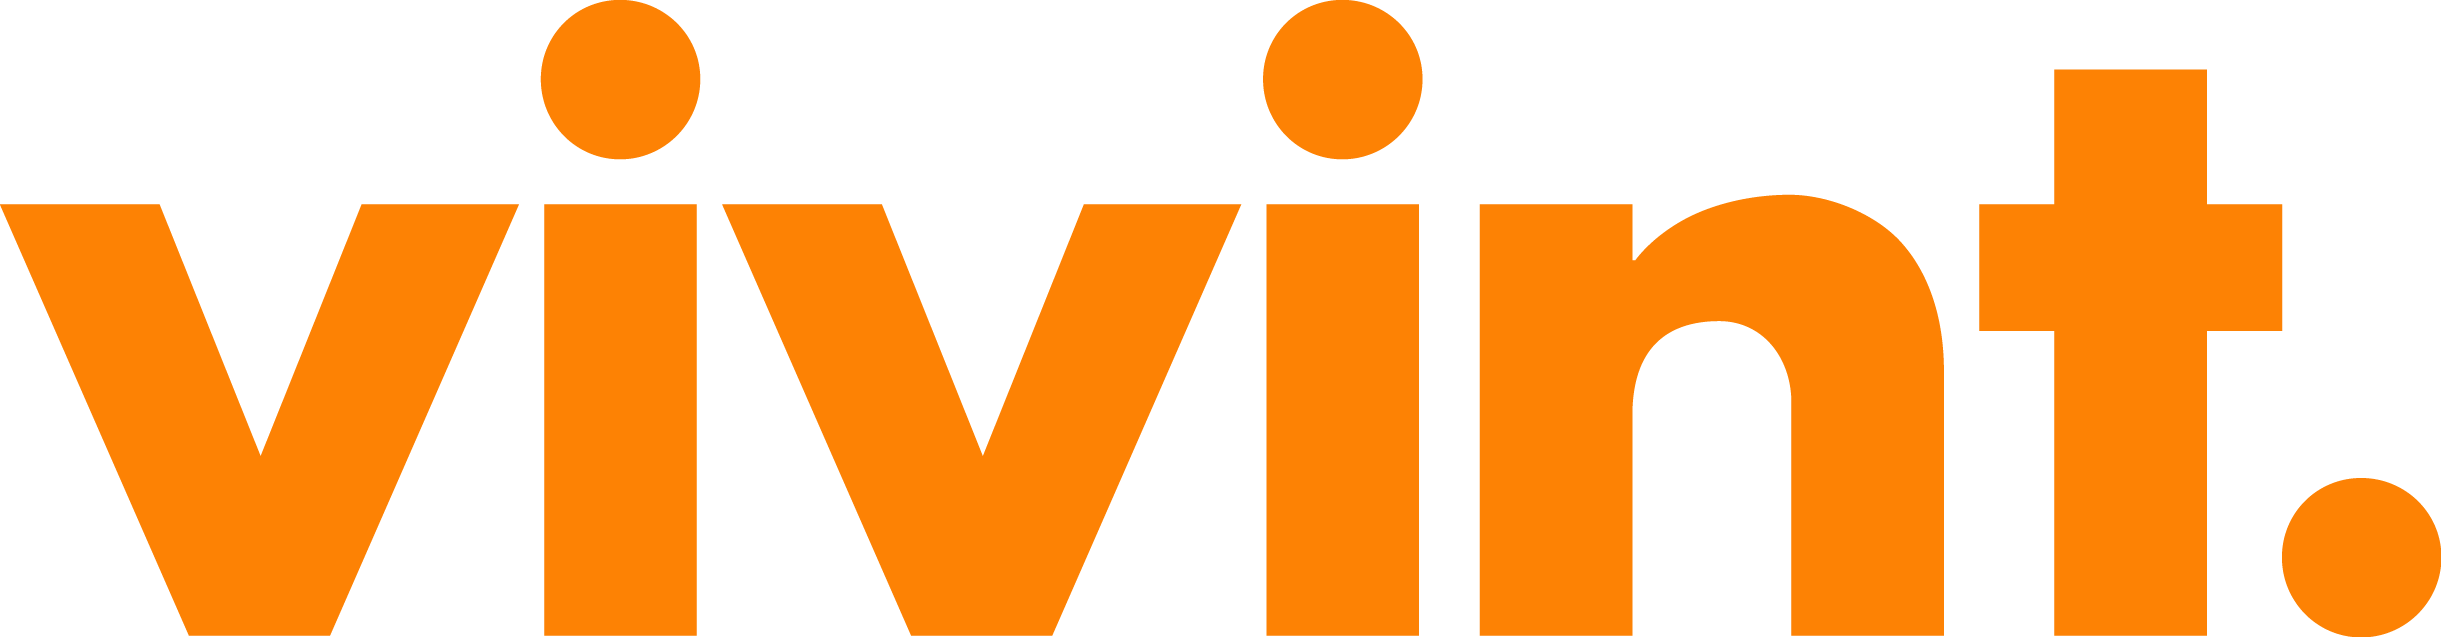 Vivint Smart Home Security System Review - Vivint Logo Png (2441x637), Png Download